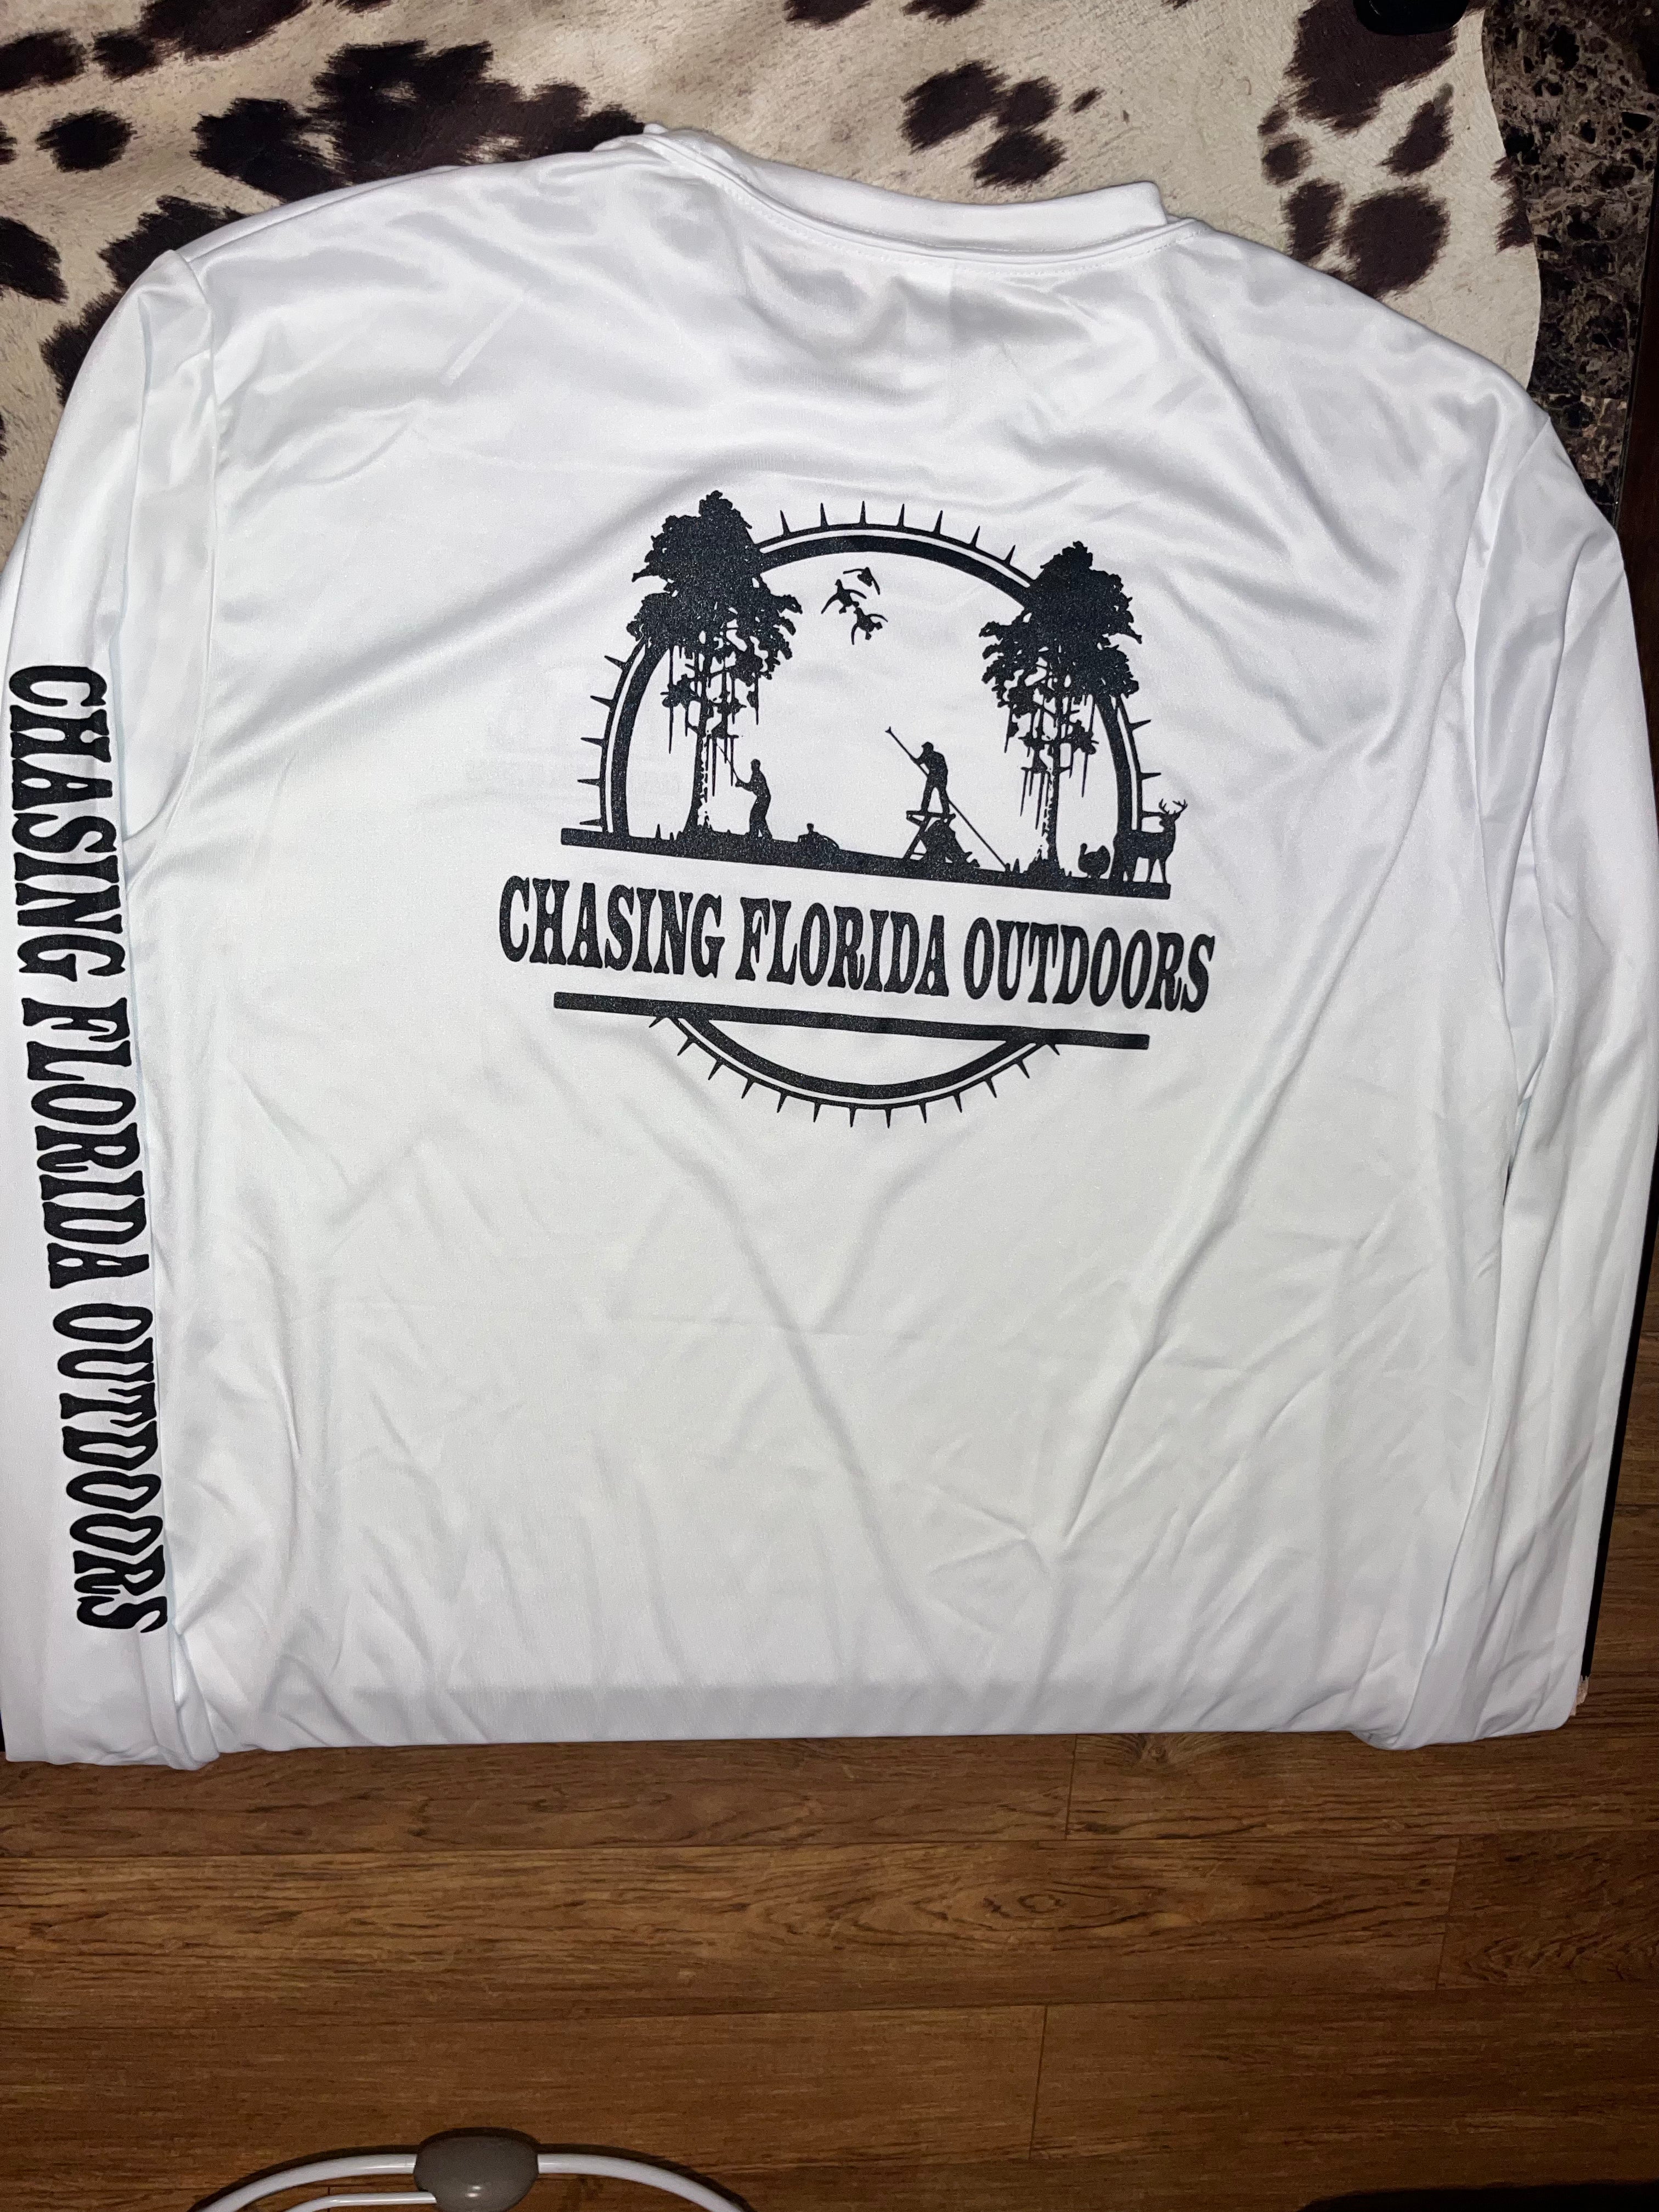 Long sleeve performance shirt – Chasing Florida outdoors